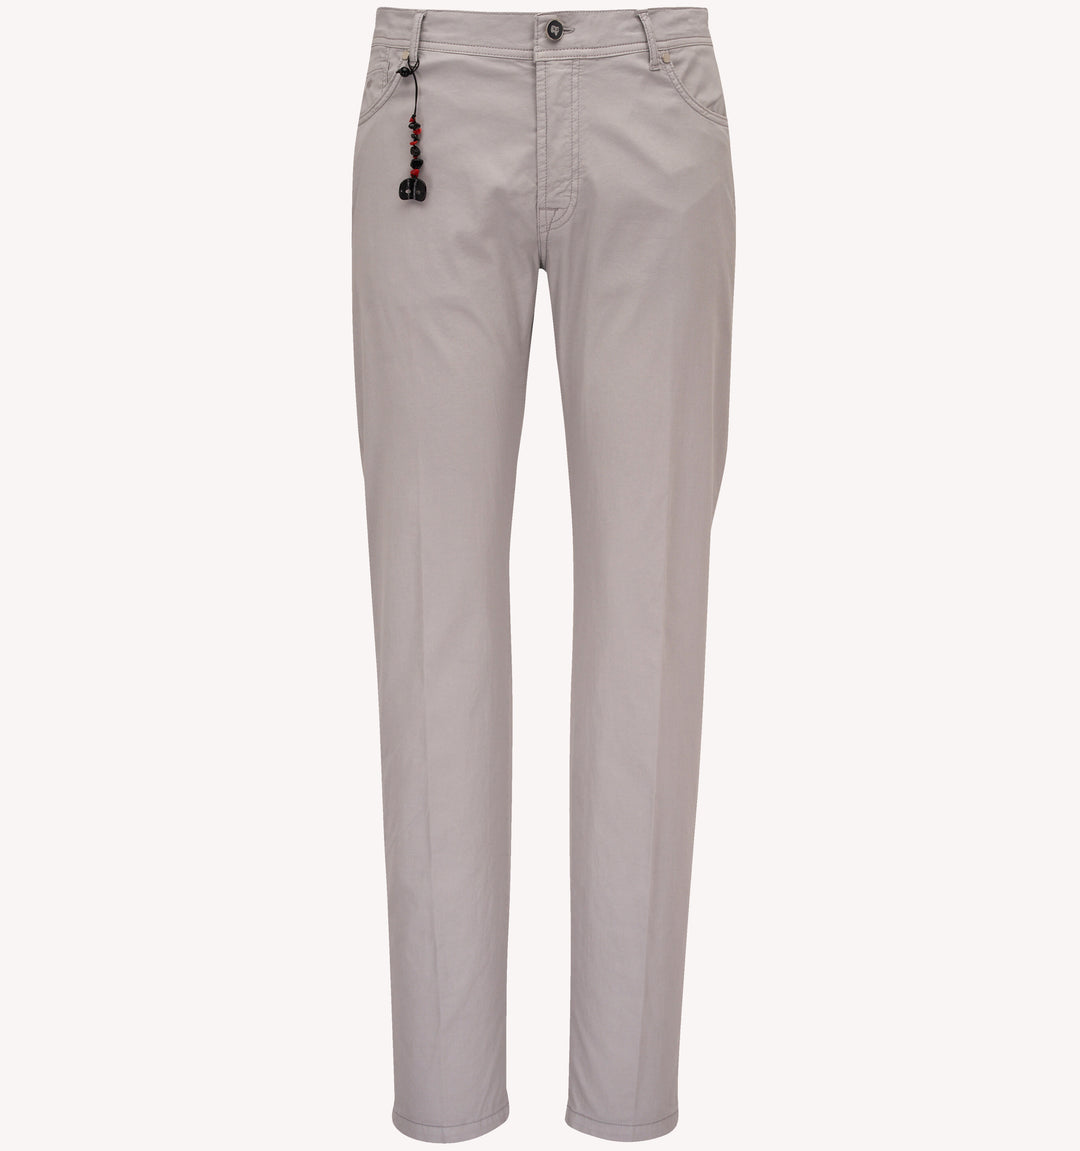 Pescarolo 5-Pocket Pant in Soft Grey